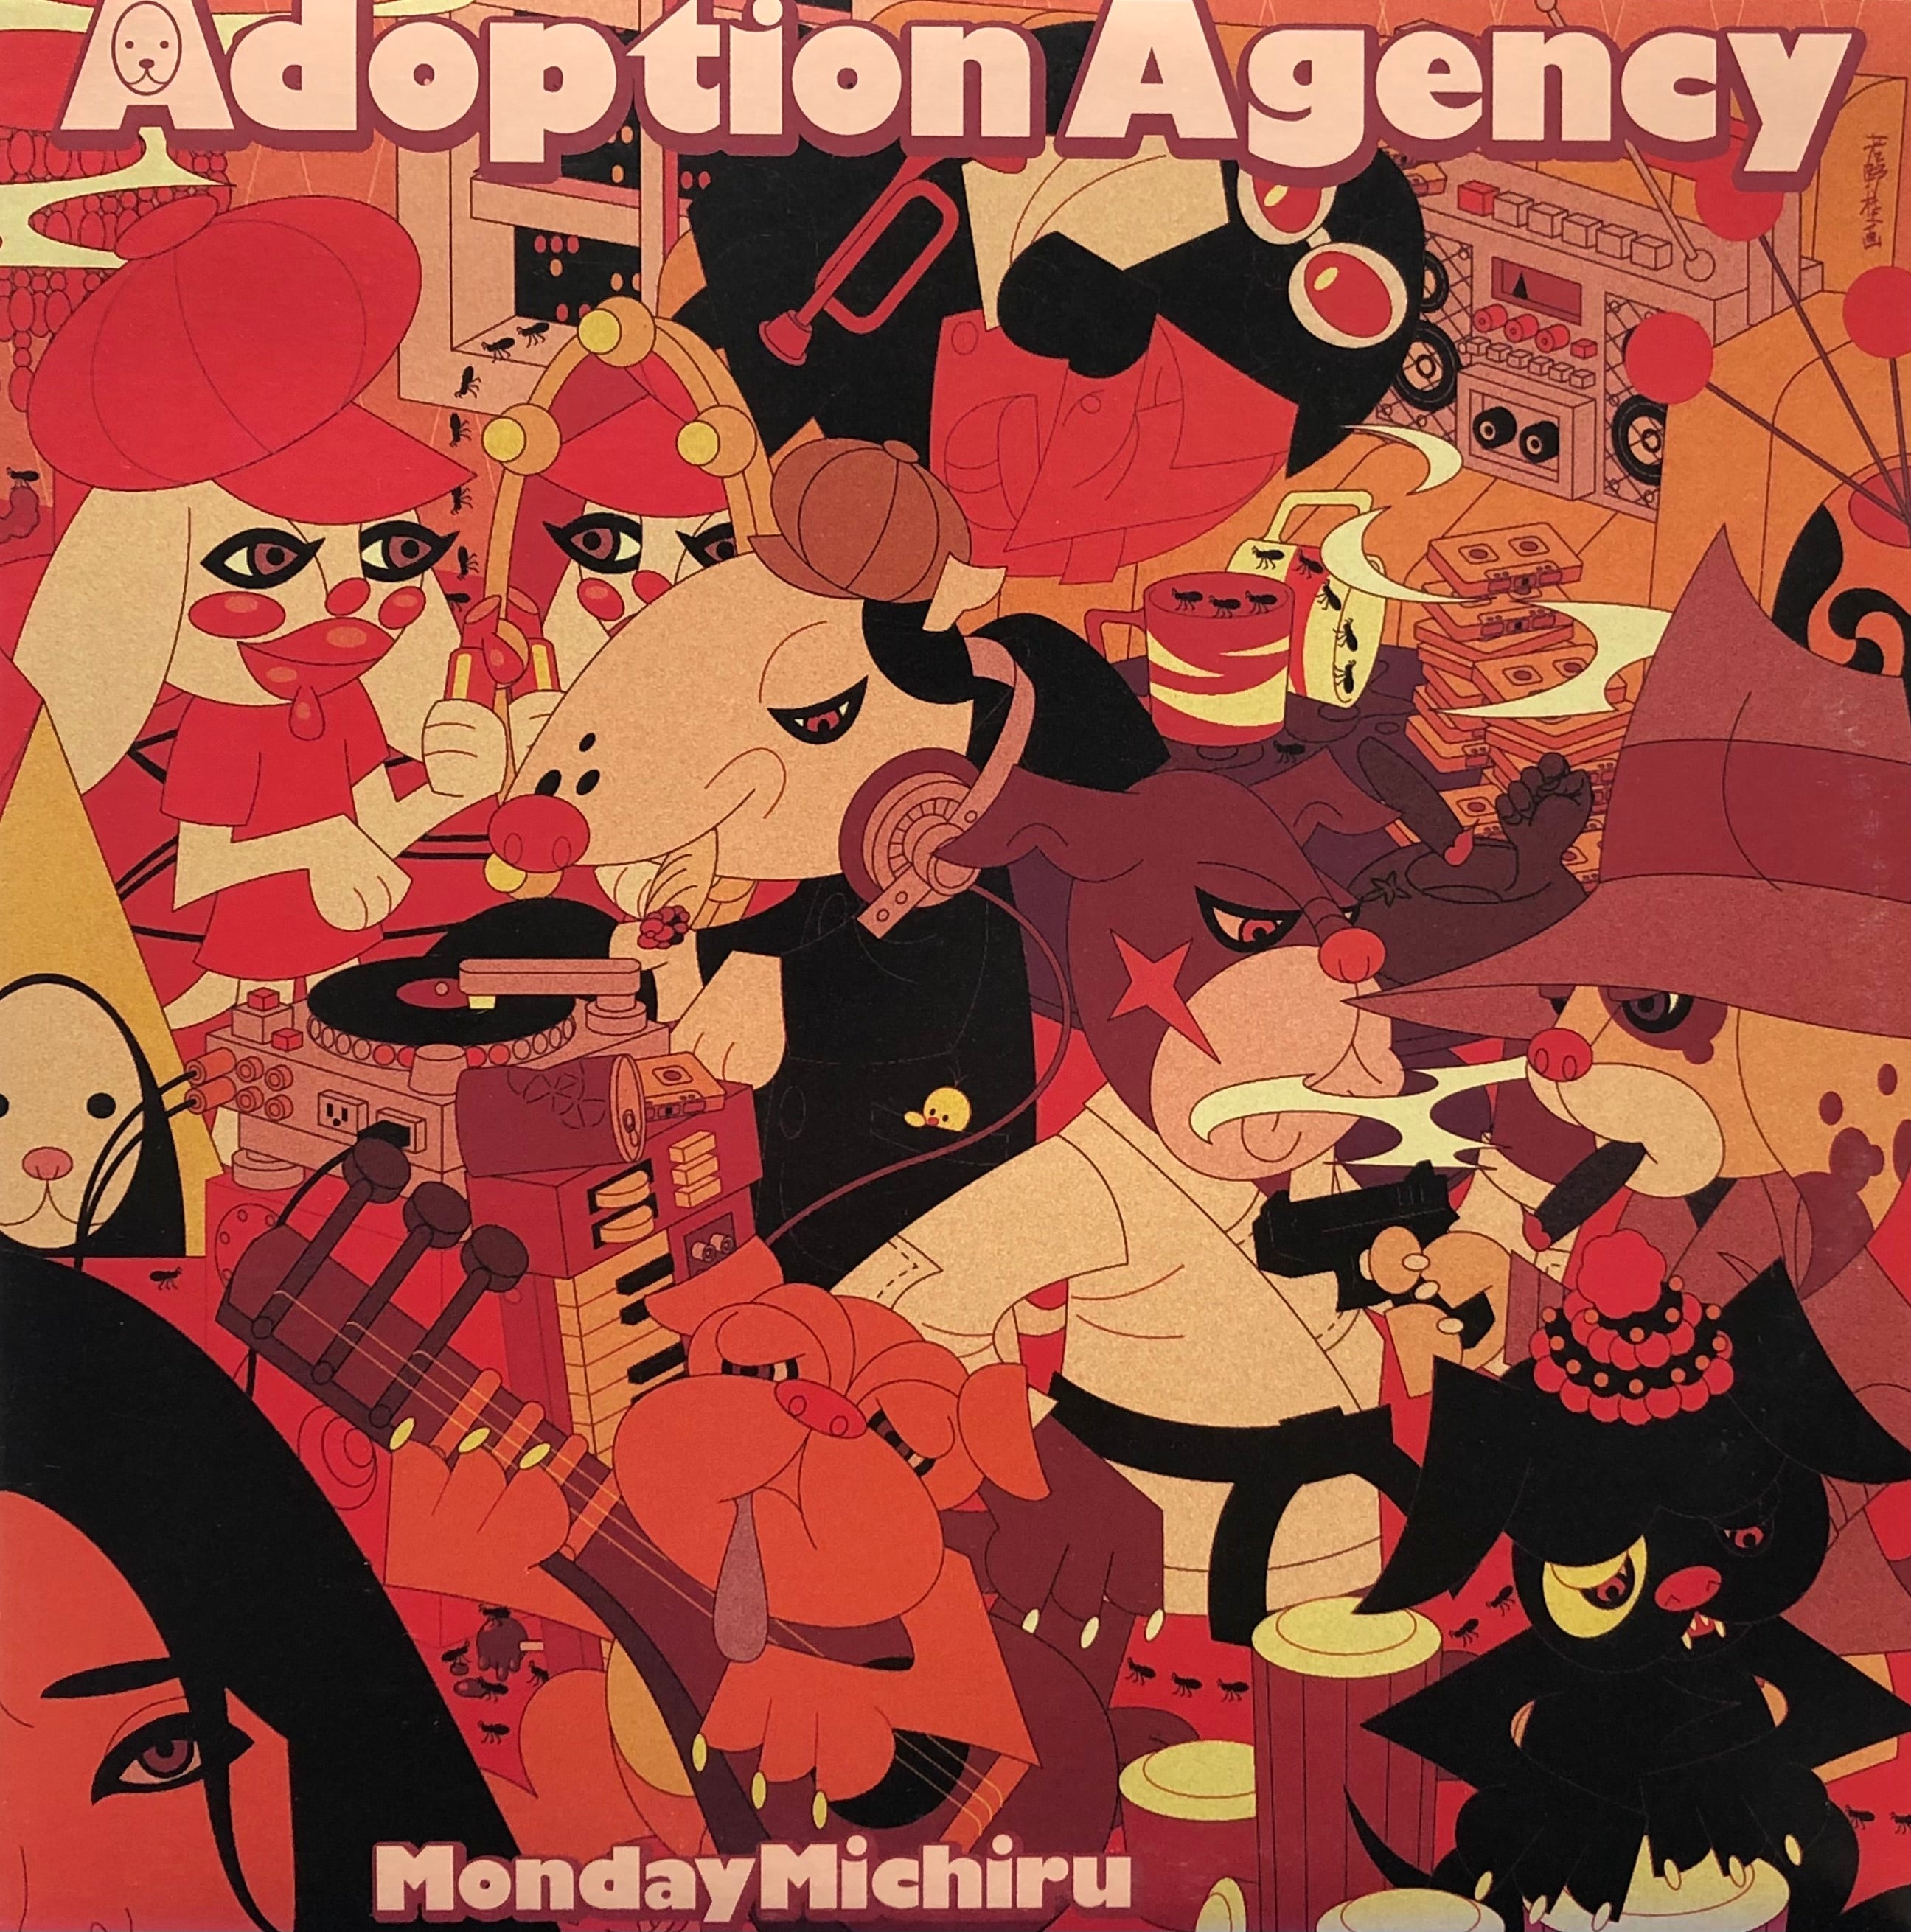 MONDAY MICHIRU / Adoption Agency (Kitty, KTJR-9033, 12inch